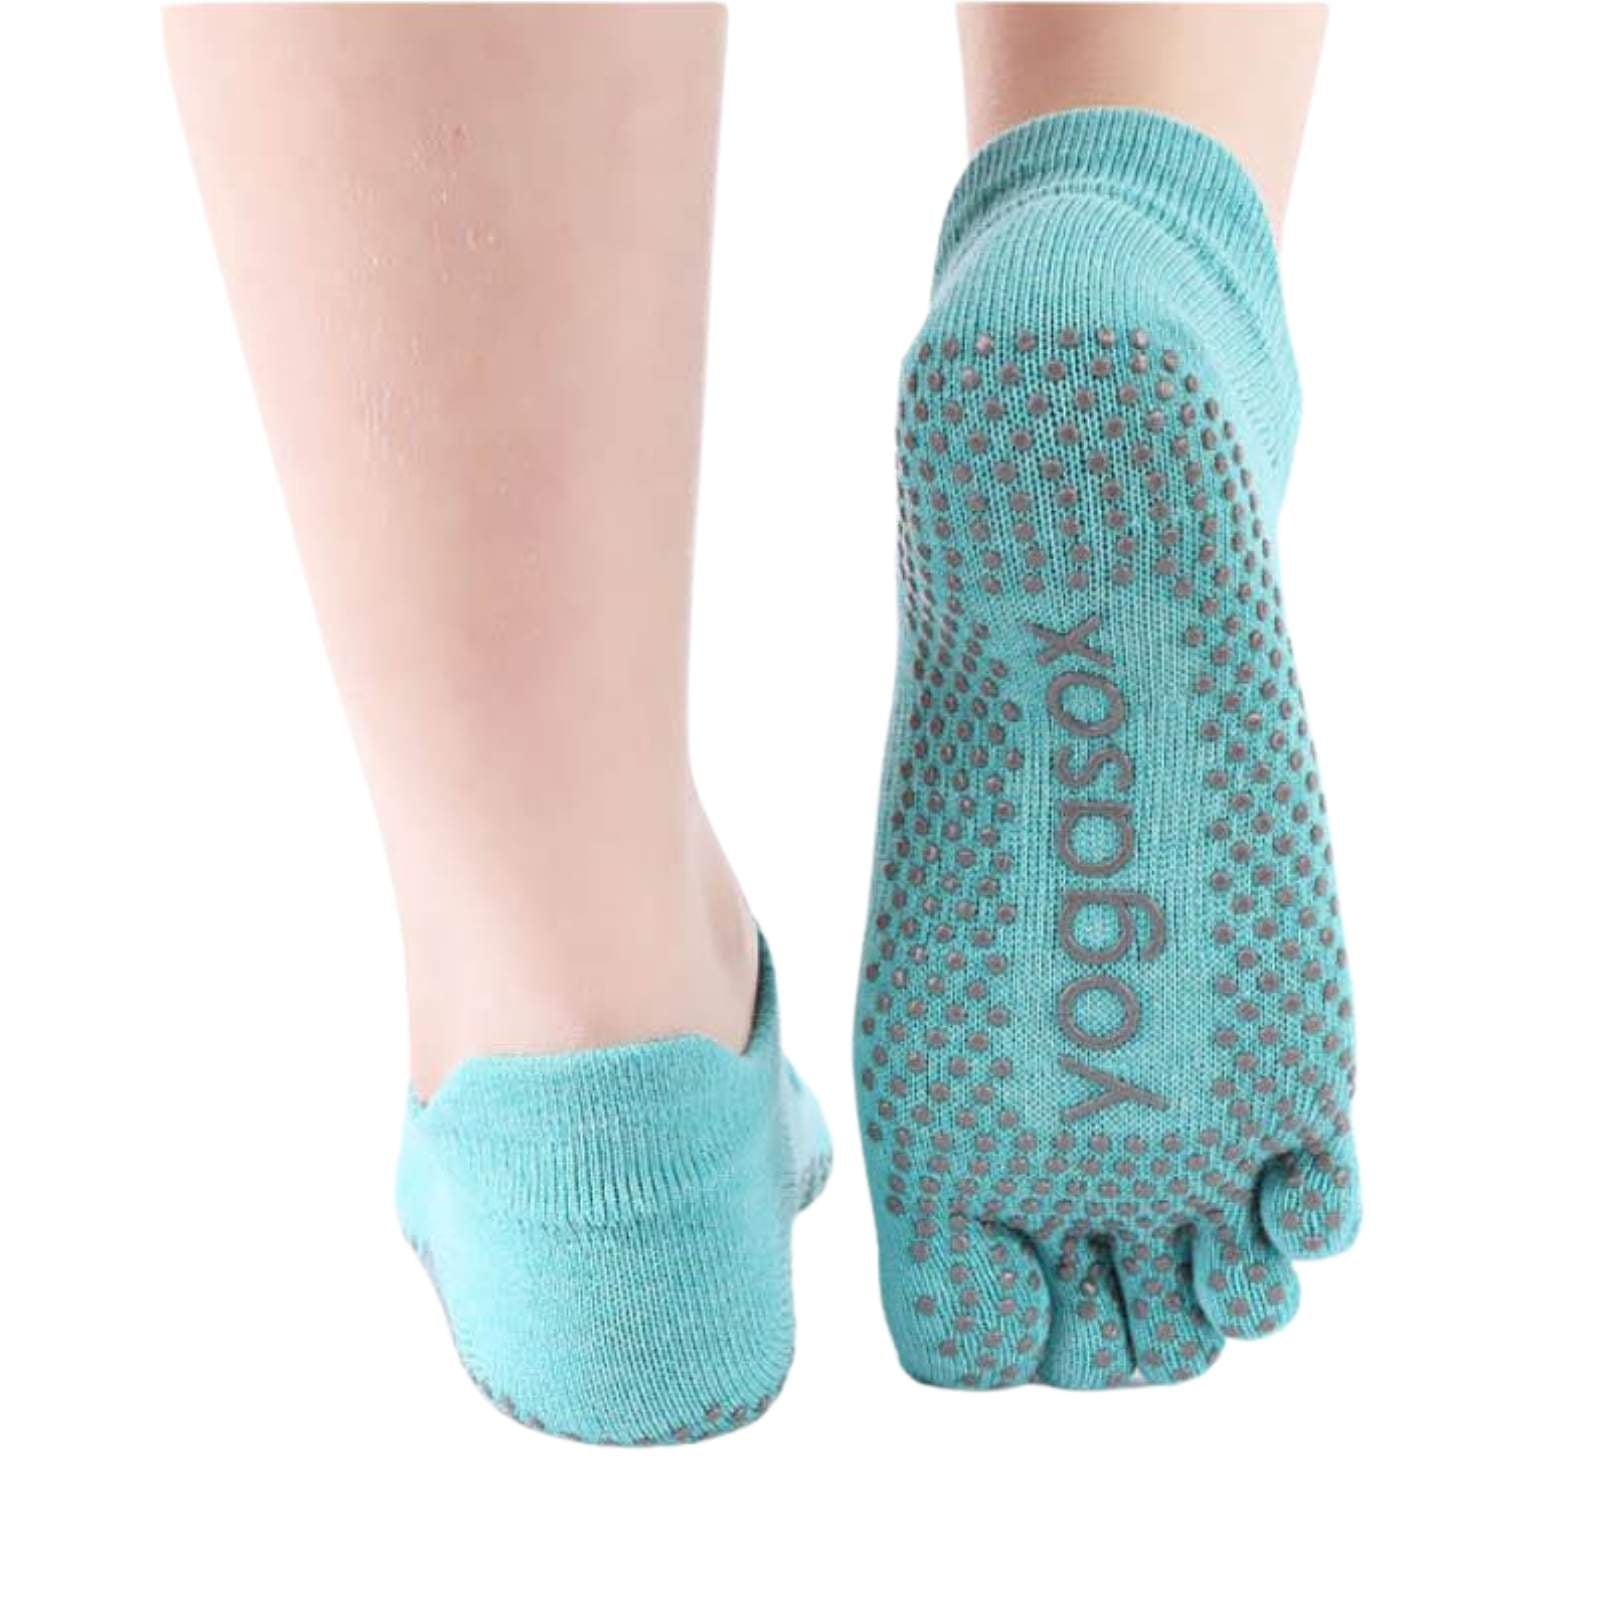 Buy Yoga Gloves Non Slip Skid Pilates Barre with Grips for Women 4